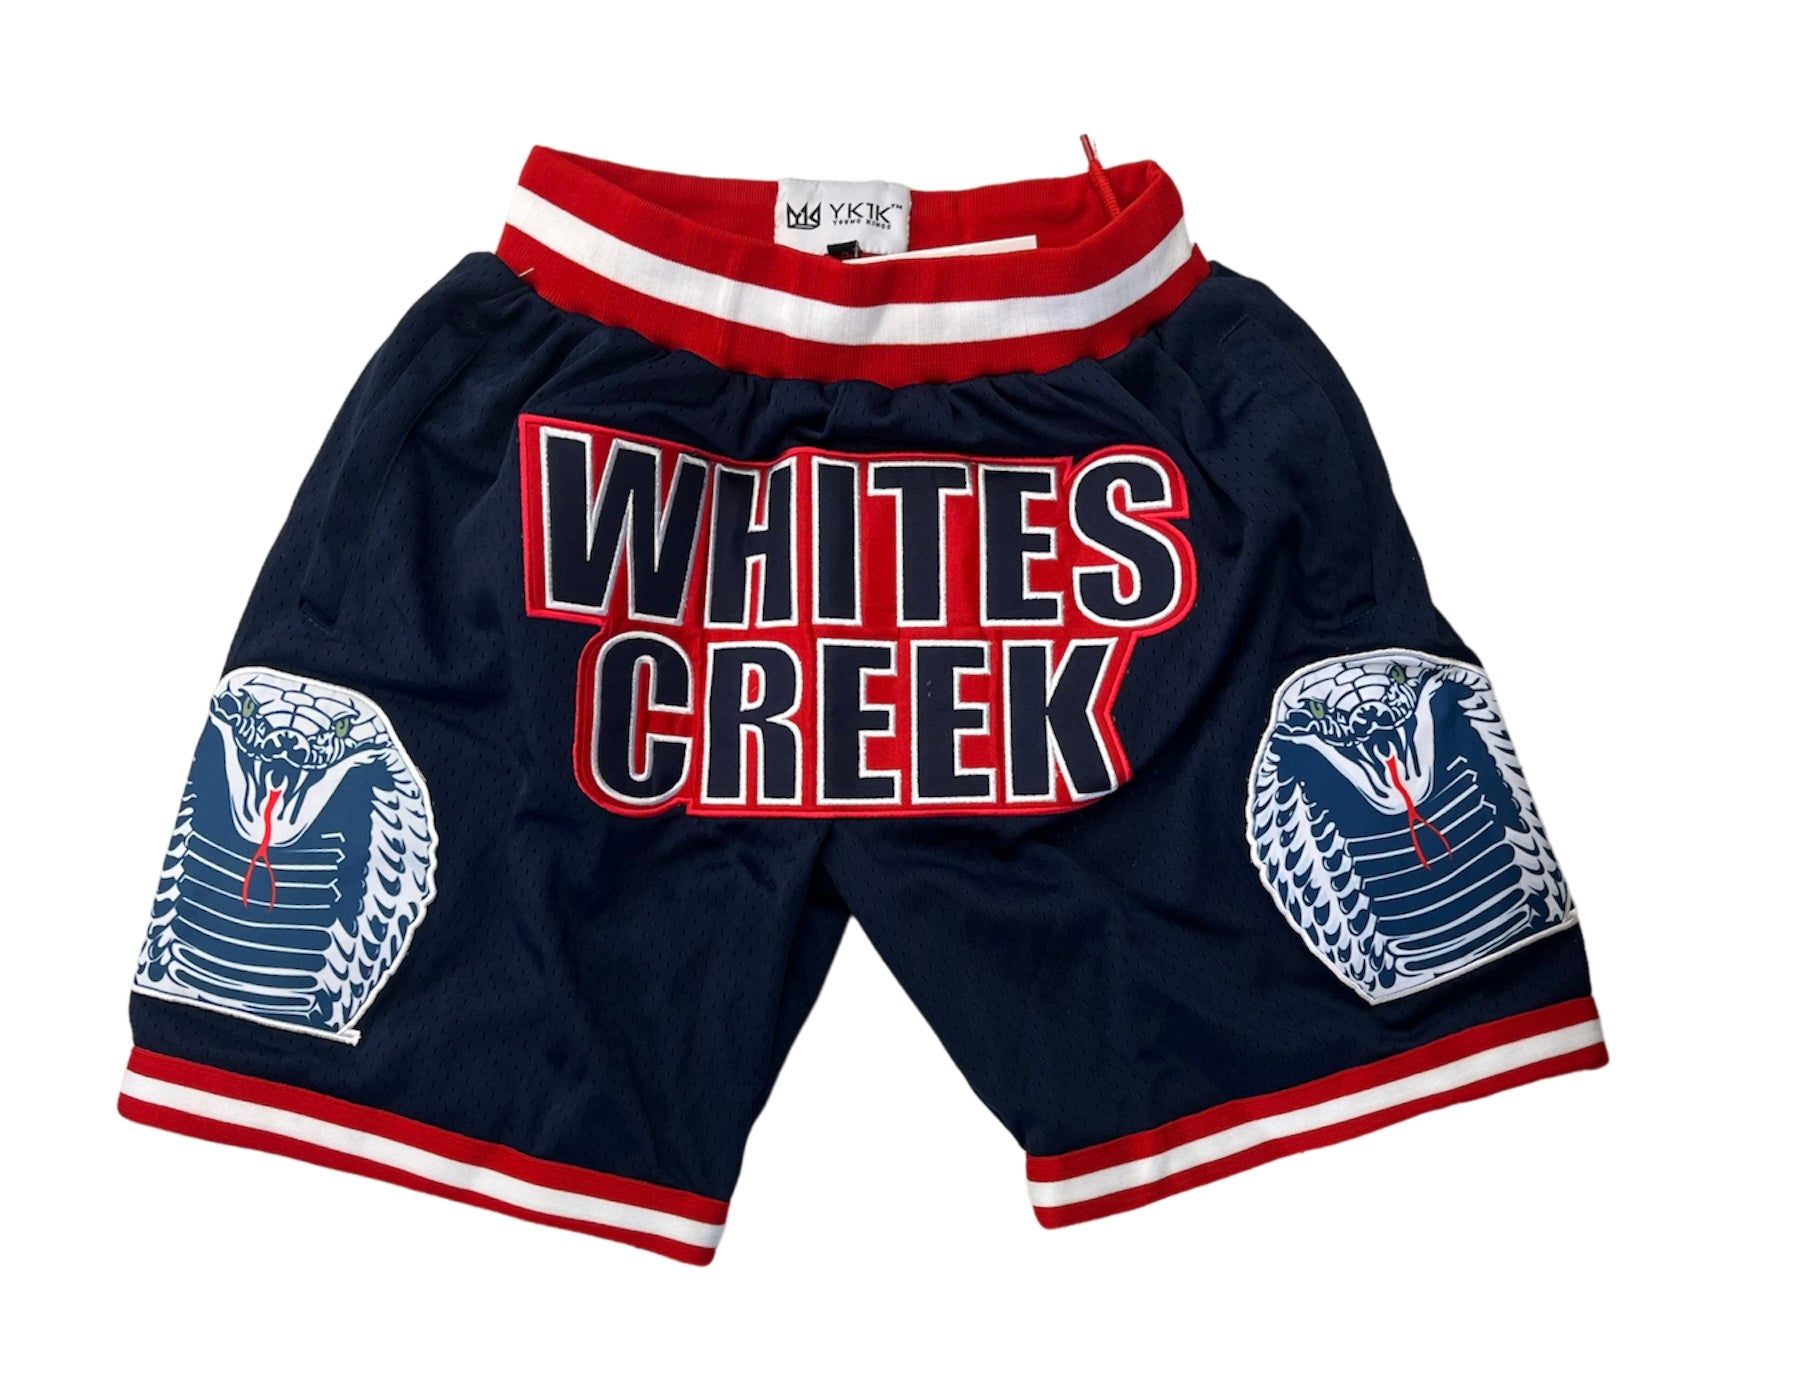 WHITES CREEK Basketball Shorts